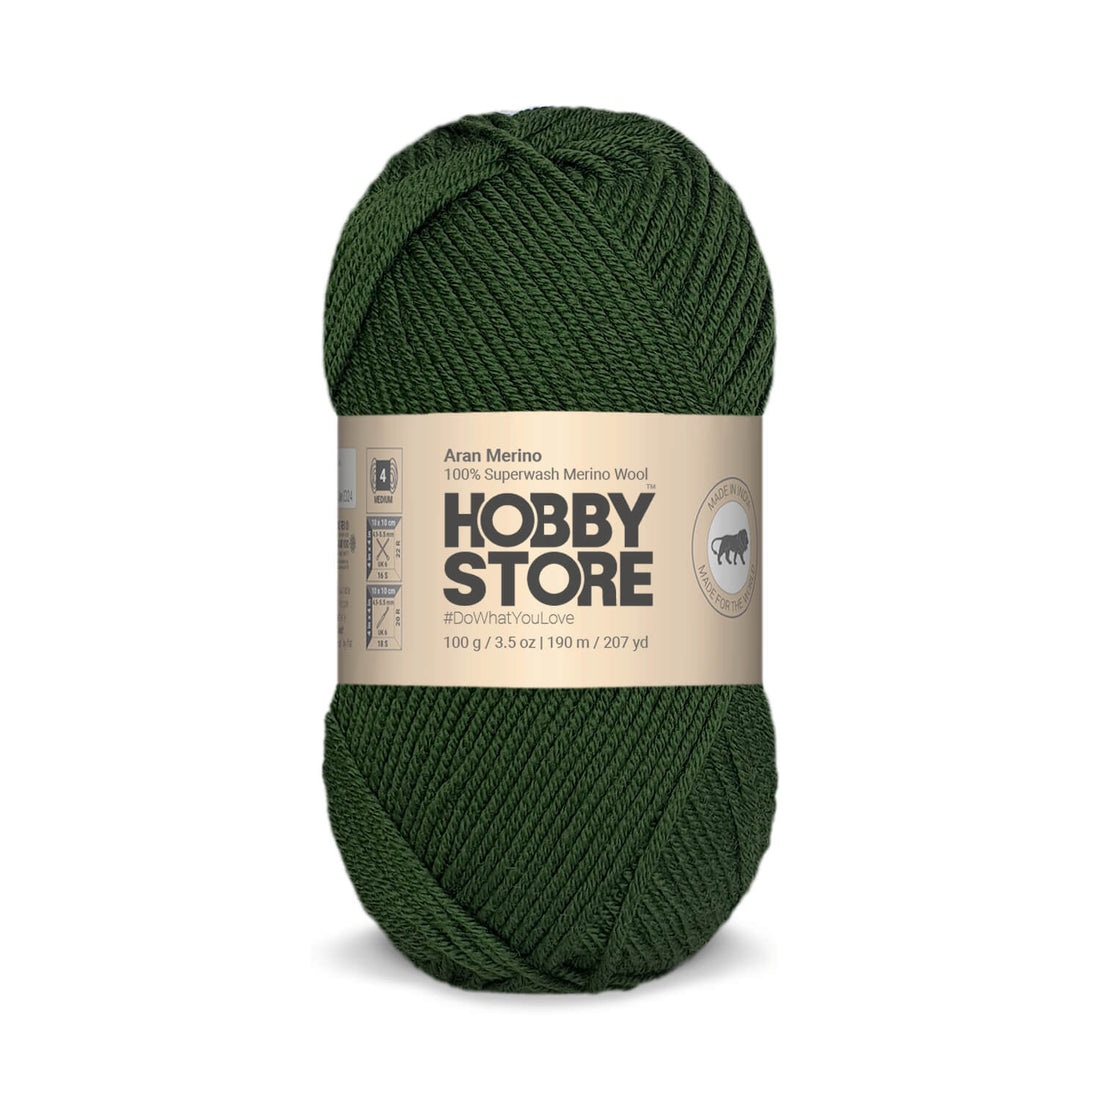 Bulky Yarn by Hobby Store - Greenish Grey 6010